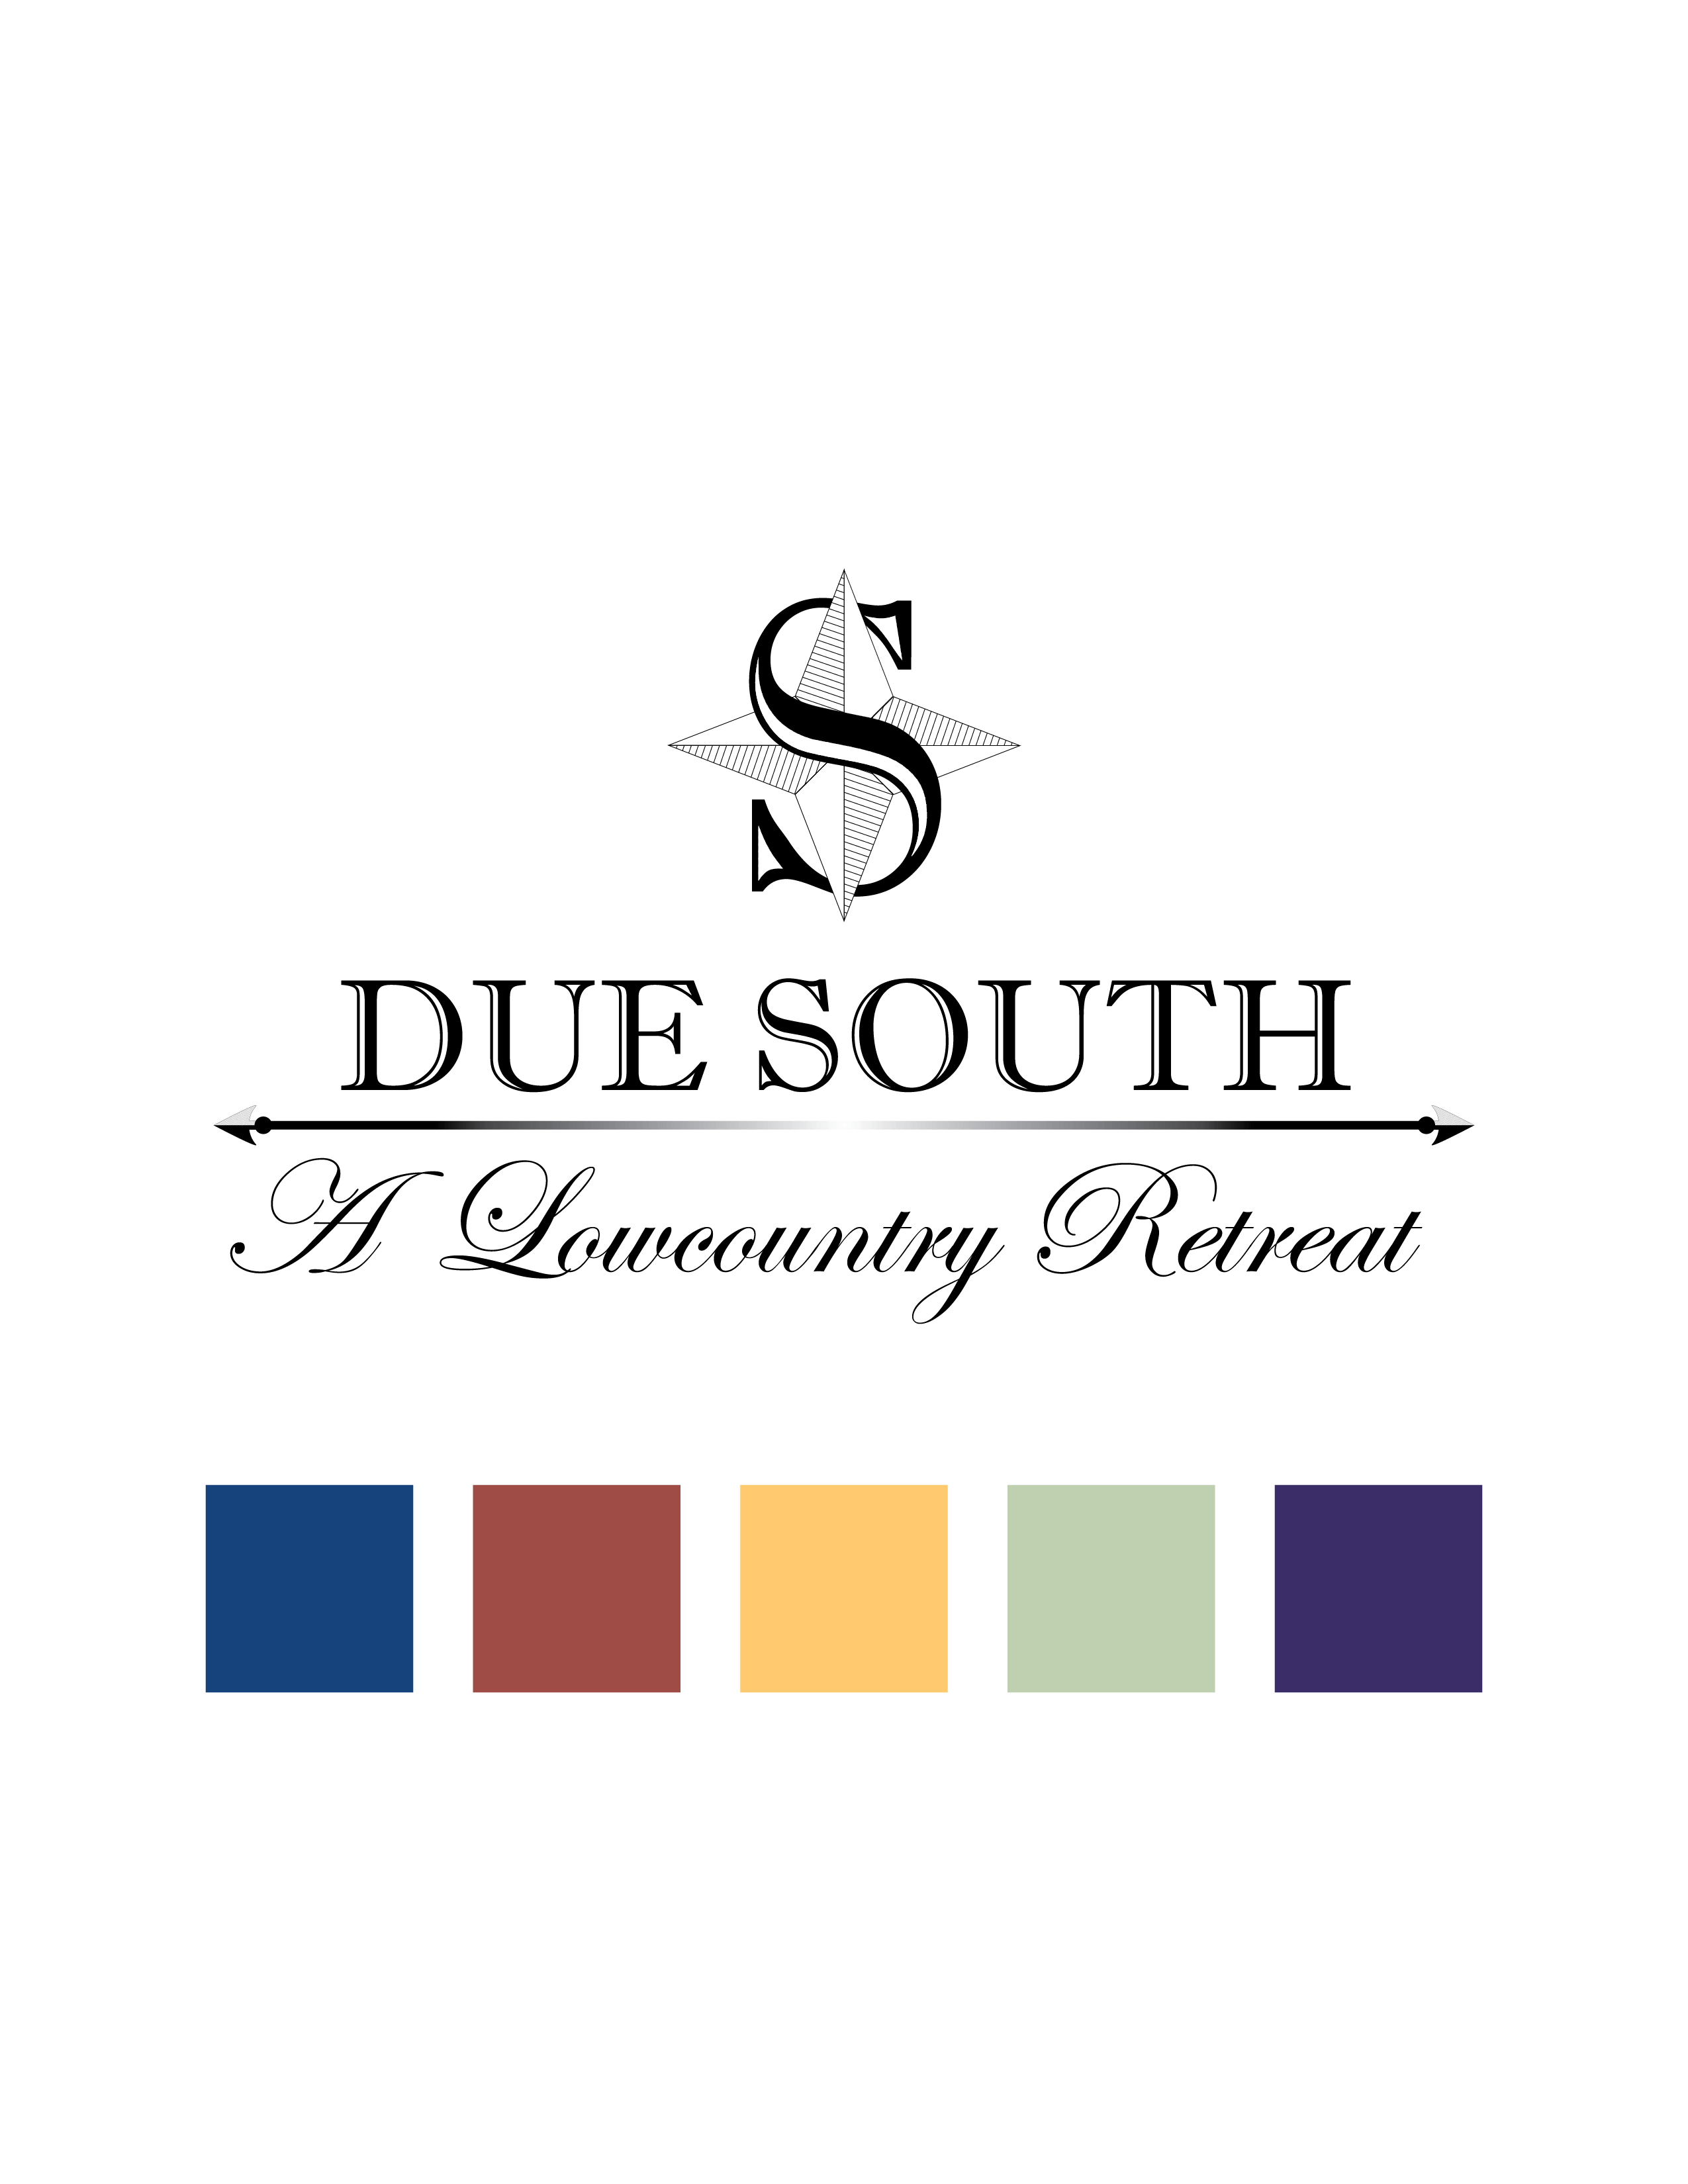 South Logo - Kate Posek » DUE SOUTH LOGO